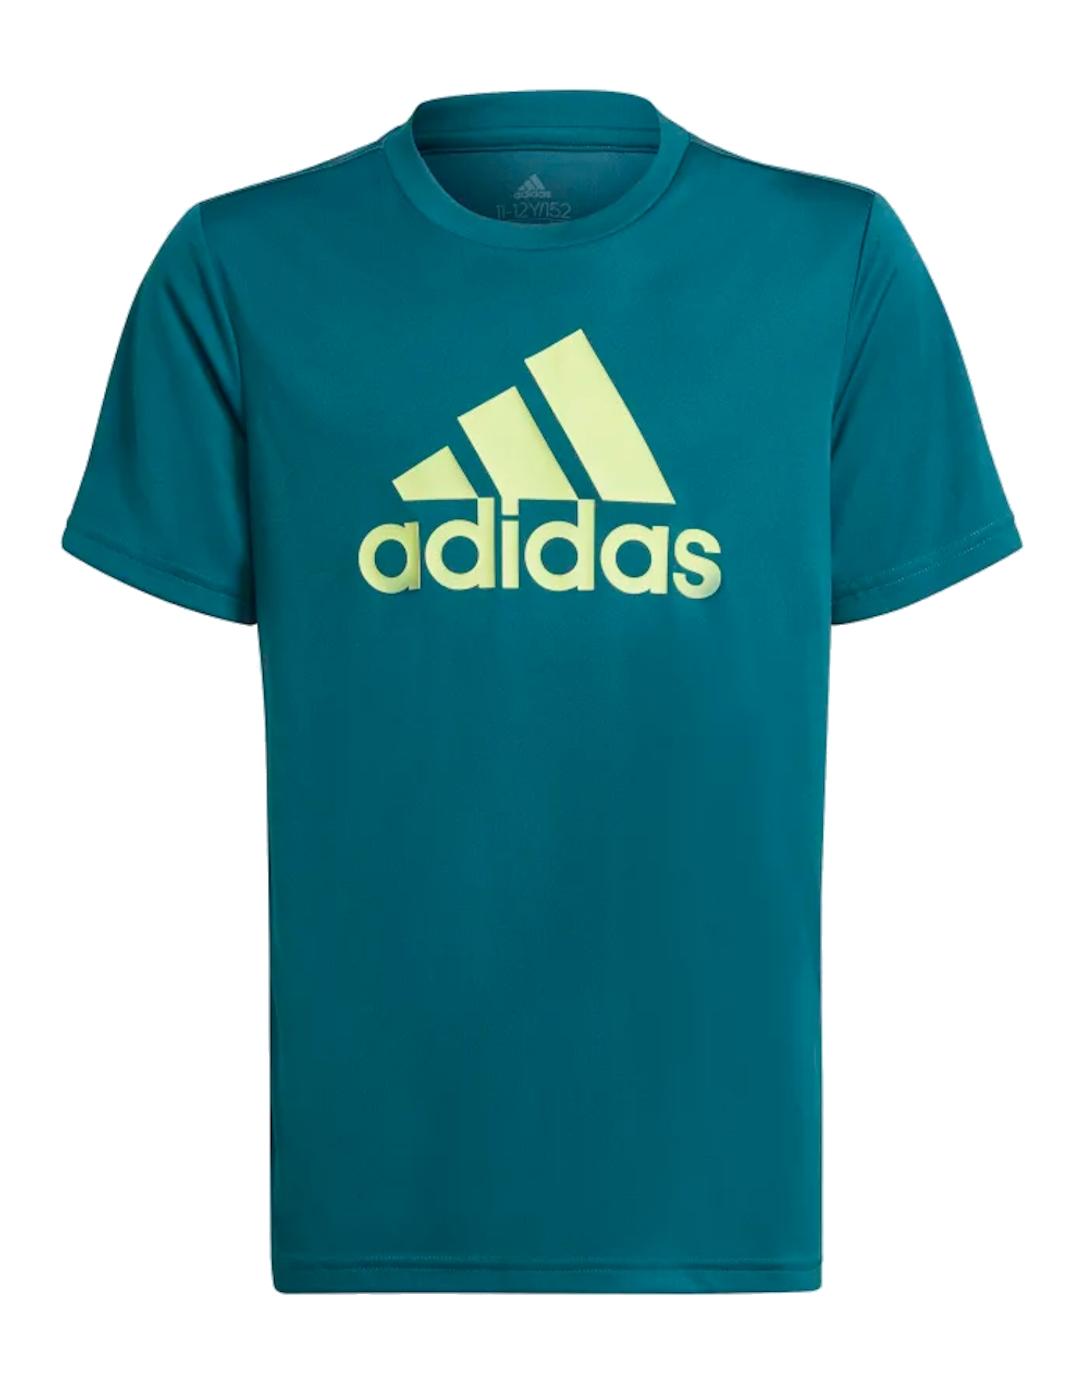 Adidas - Camiseta Adidas Juvenil Verde con Logo Grande